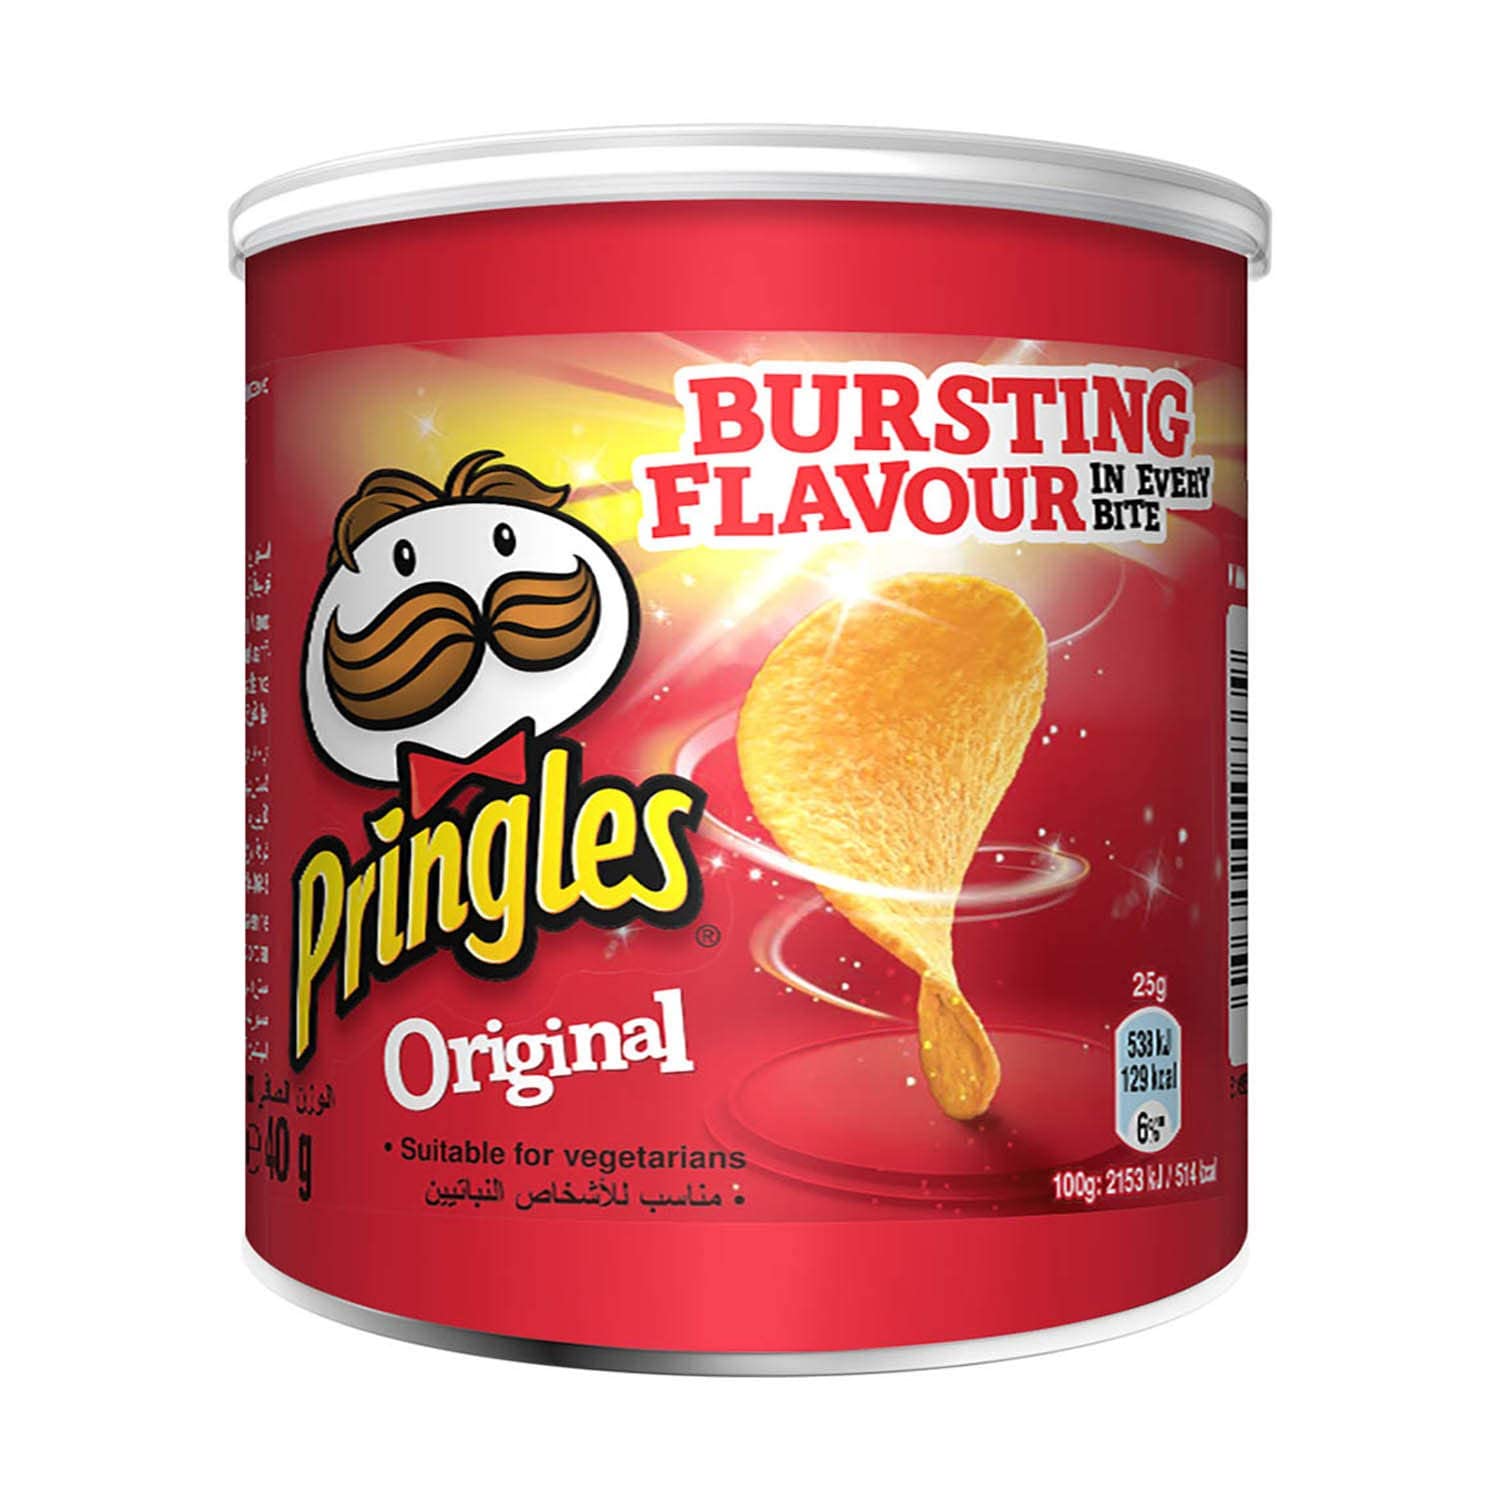 Pringles Original - 40g